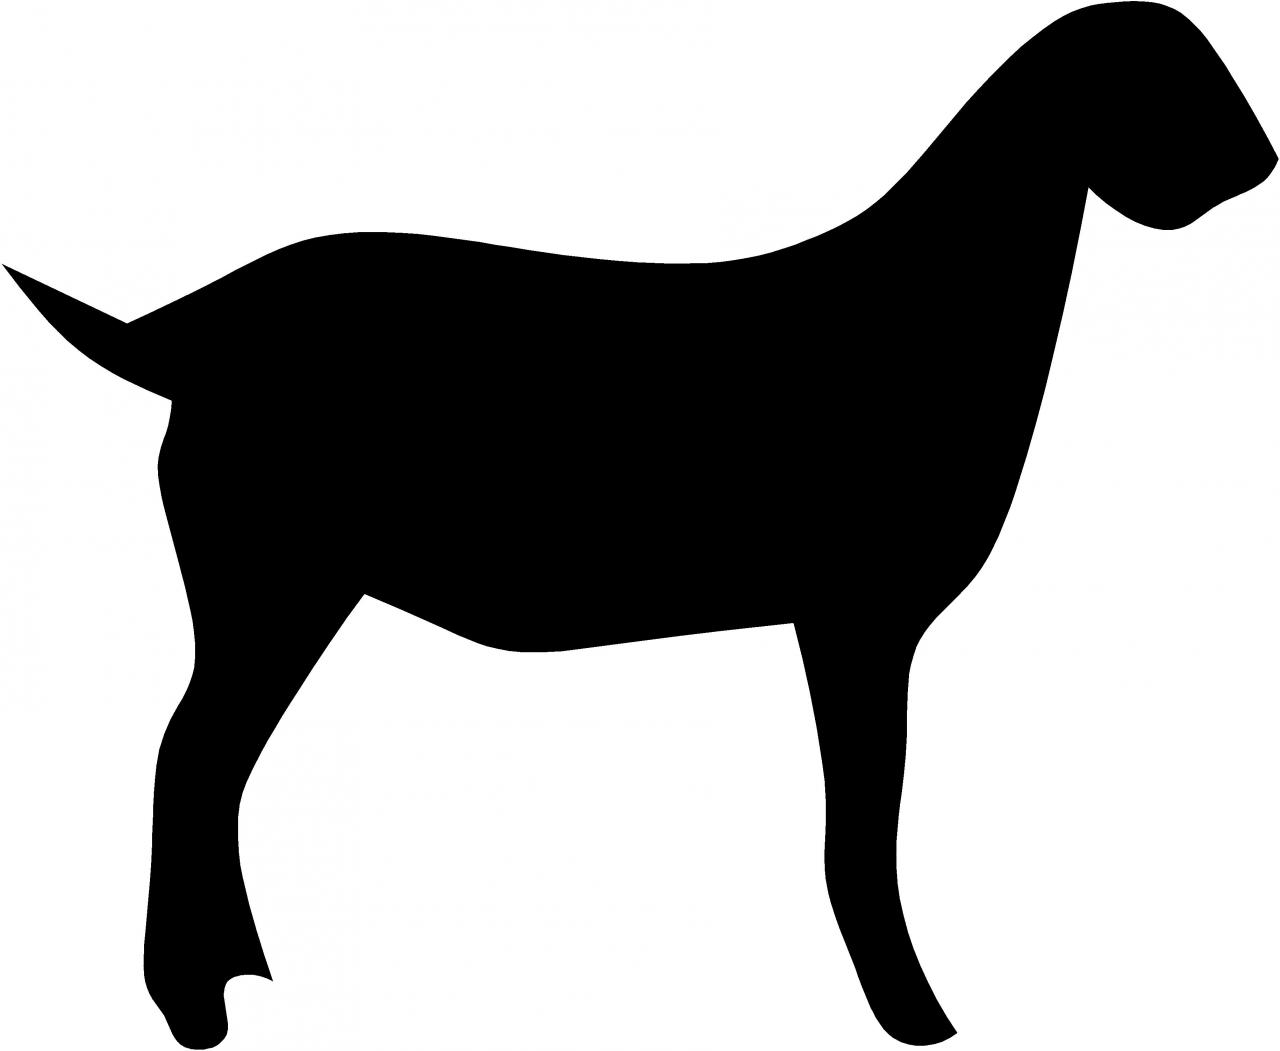 Goat silhouette clip art